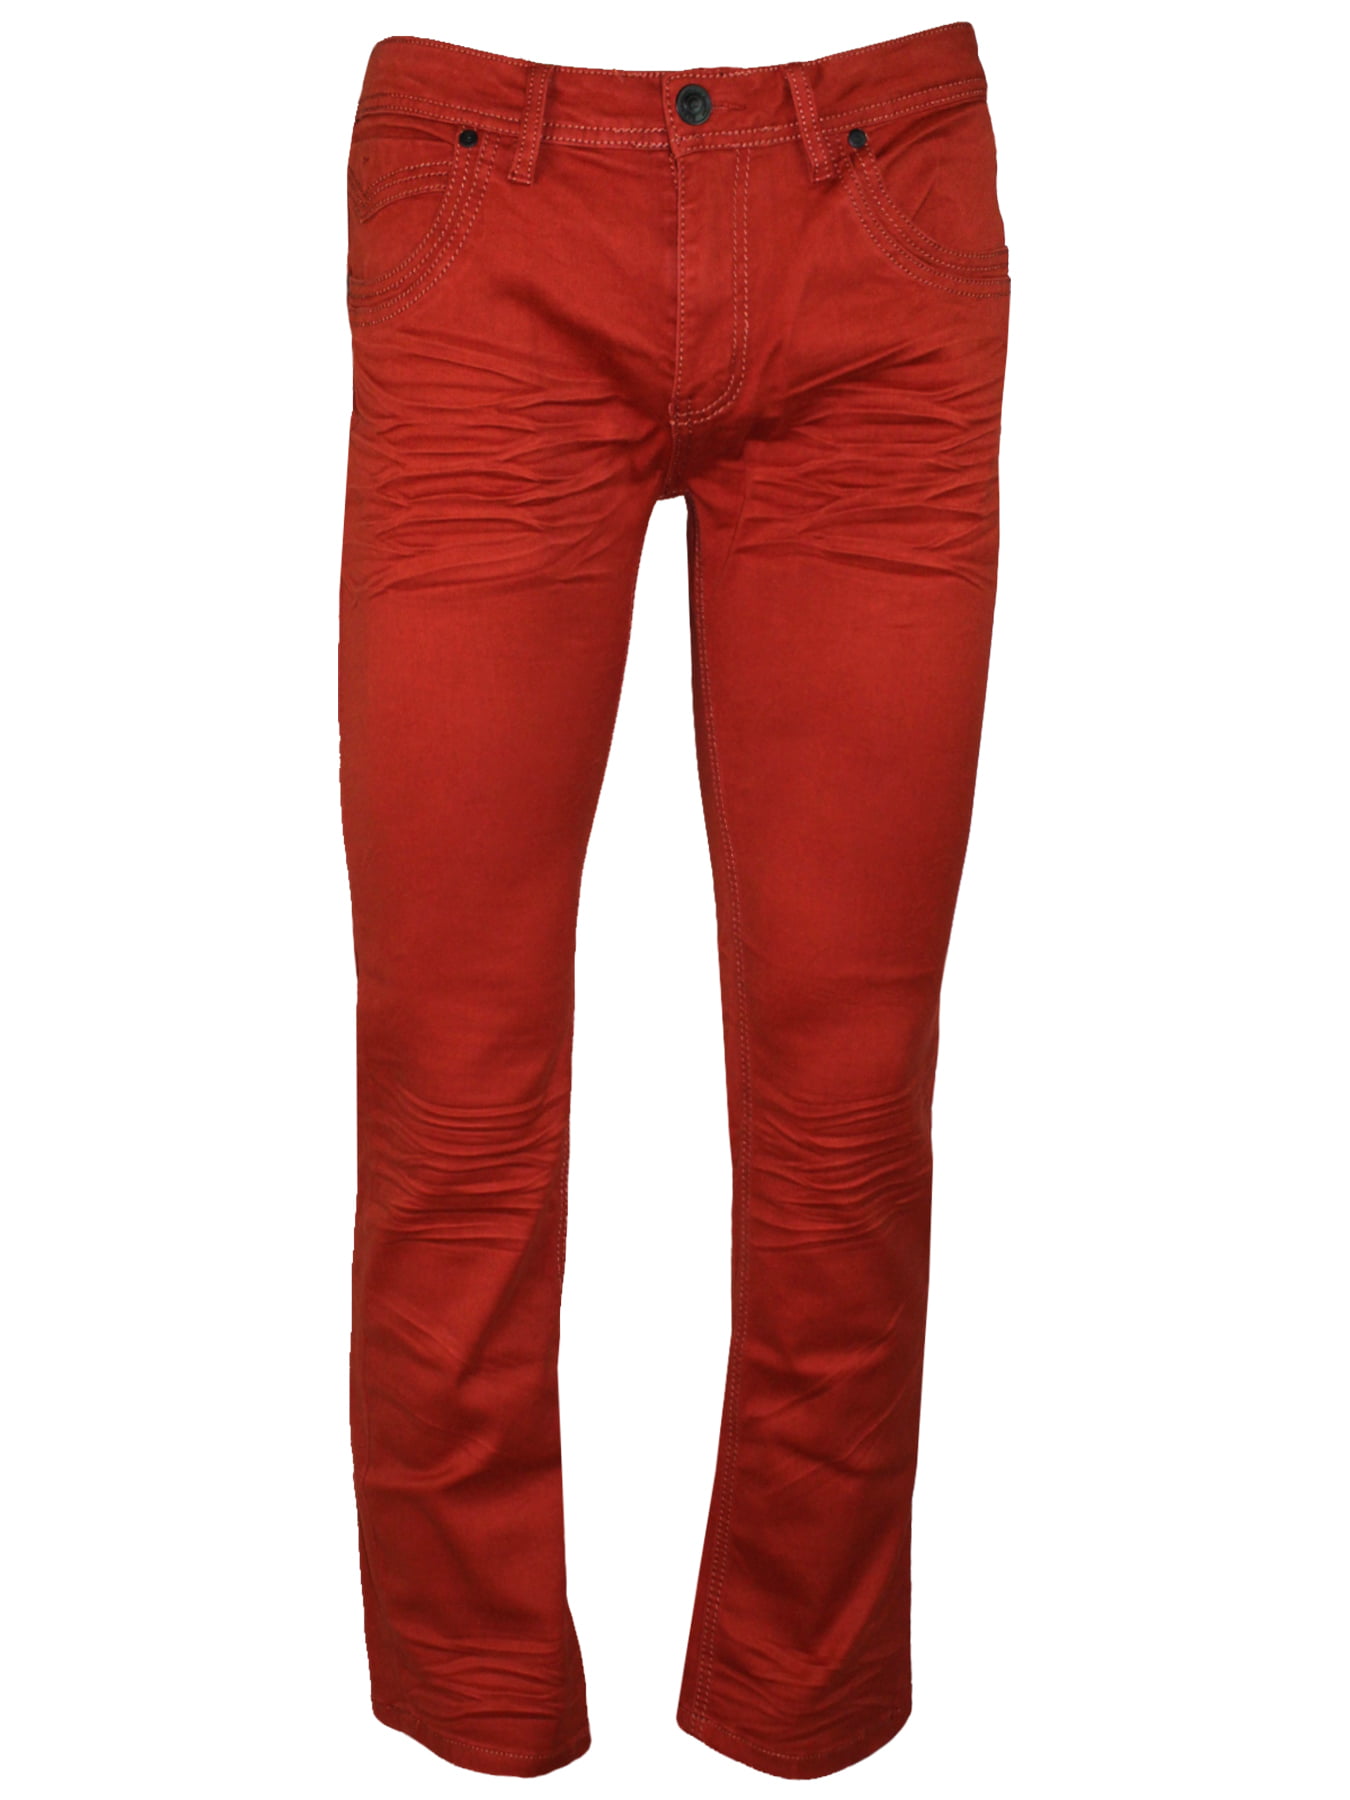 Barabas Men’s Casual Pants Relaxed Fit Rust Orange Red - Walmart.com